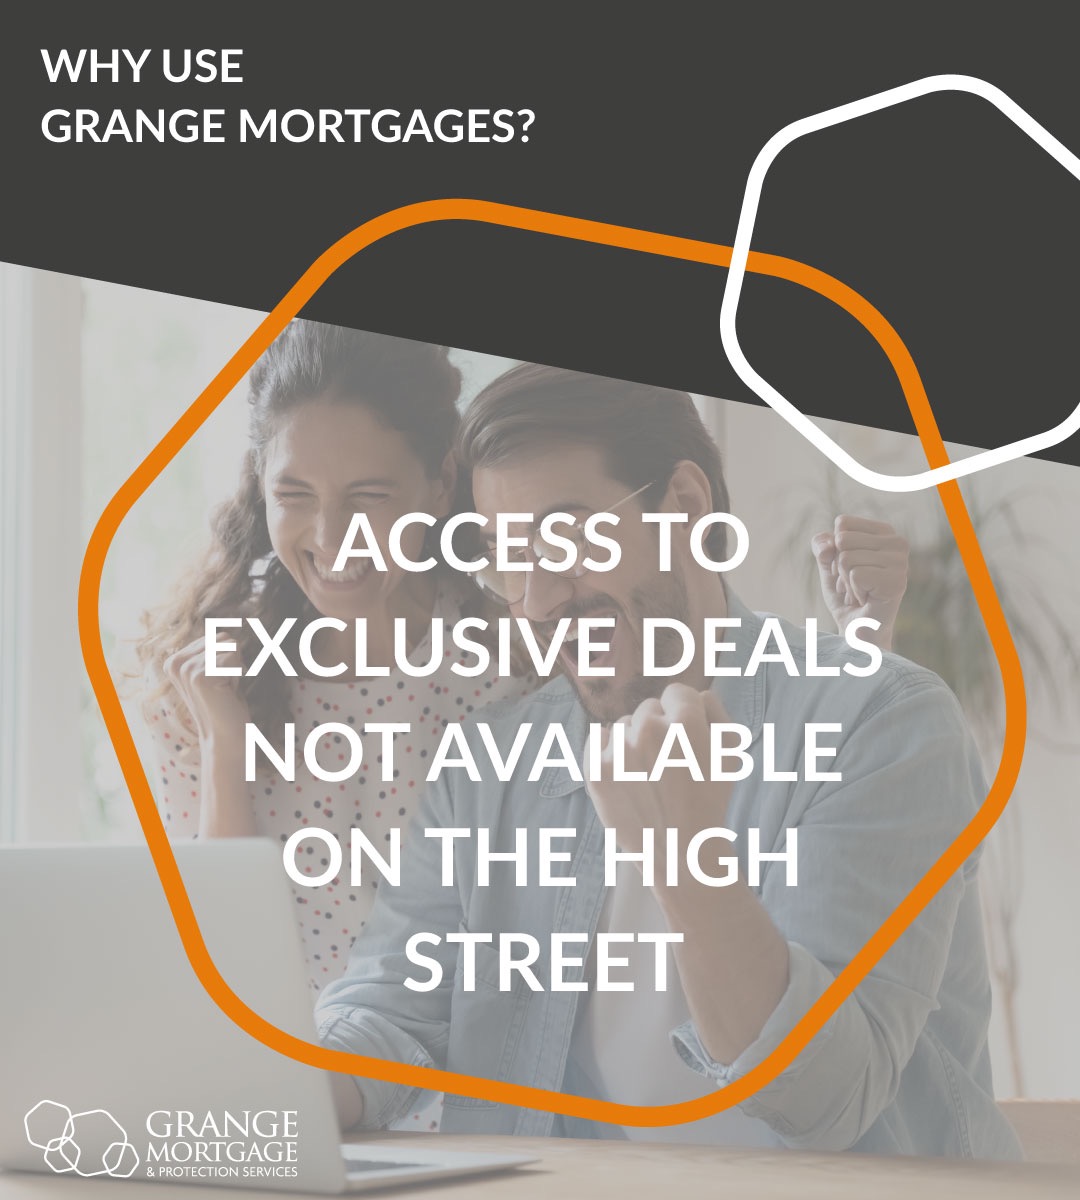 Grange Mortgage & Protection Services Ltd 09